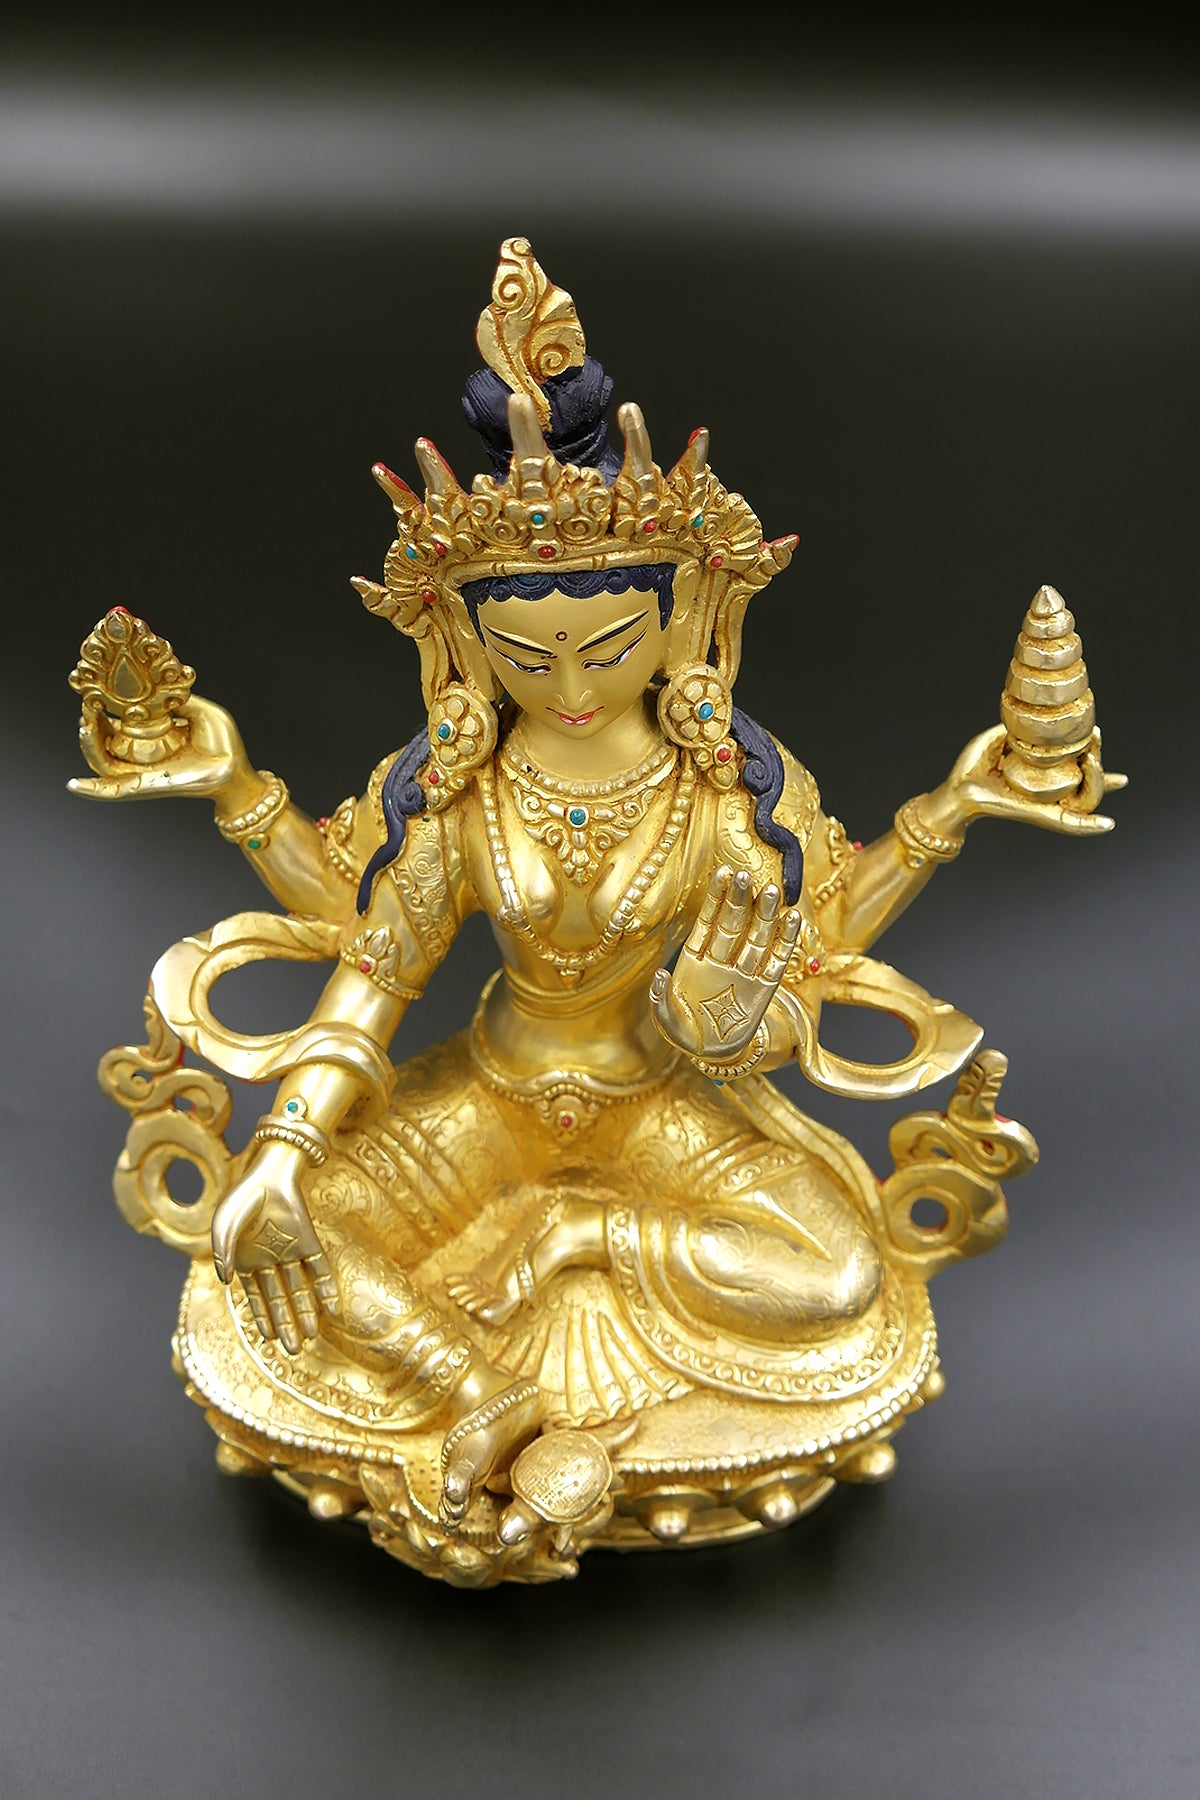 Hindu goddess Laxmi Statue - The Goddess of Wealth and Good Fortune 8"